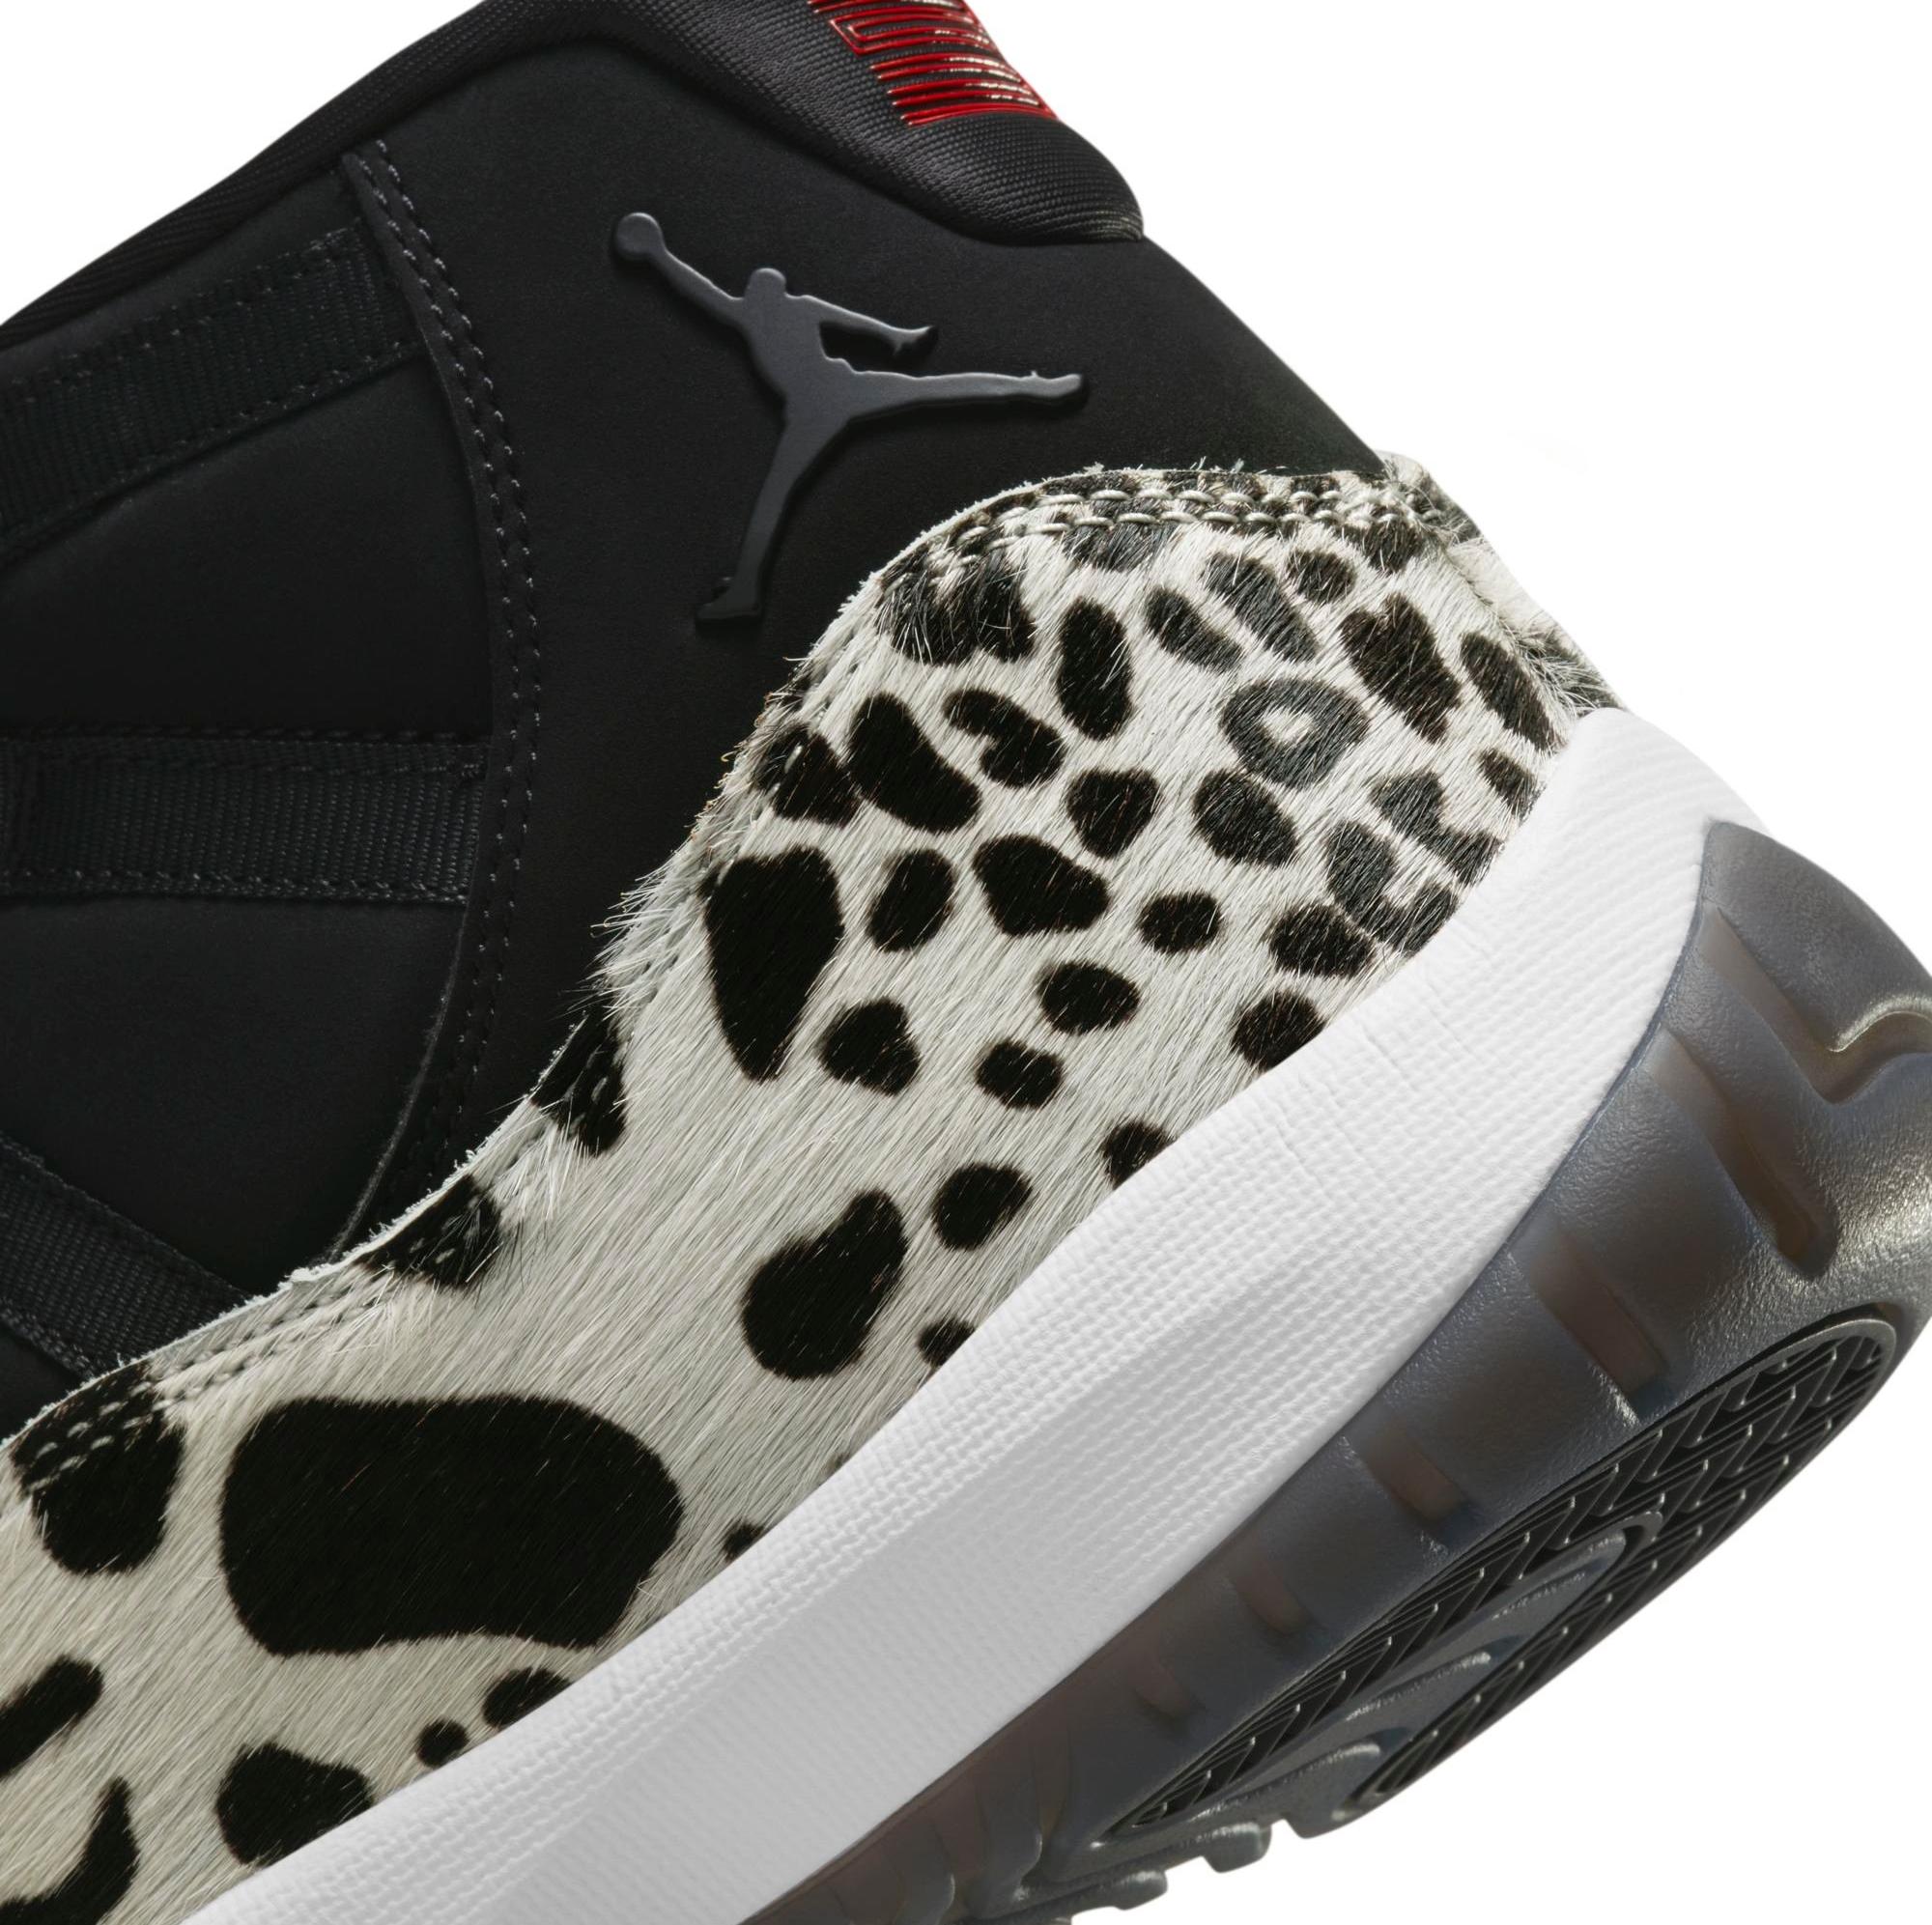 Sneakers Release – Jordan 11 Retro “Animal Instinct” Black/Gym Red 